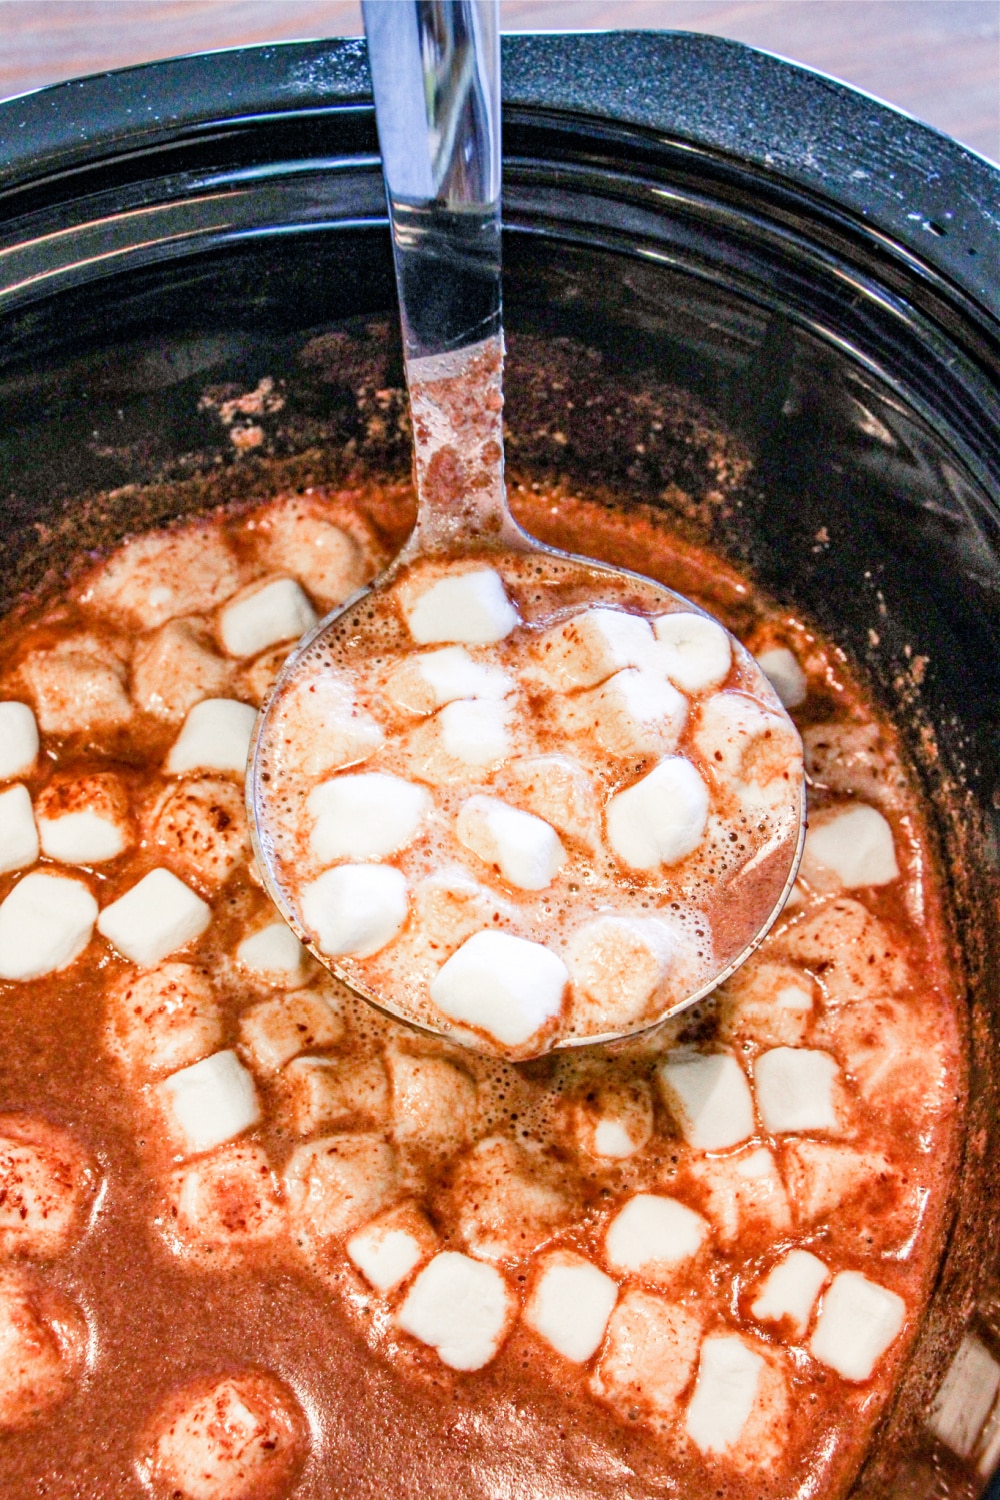 A ladle of hot cocoa with mini marshmallows